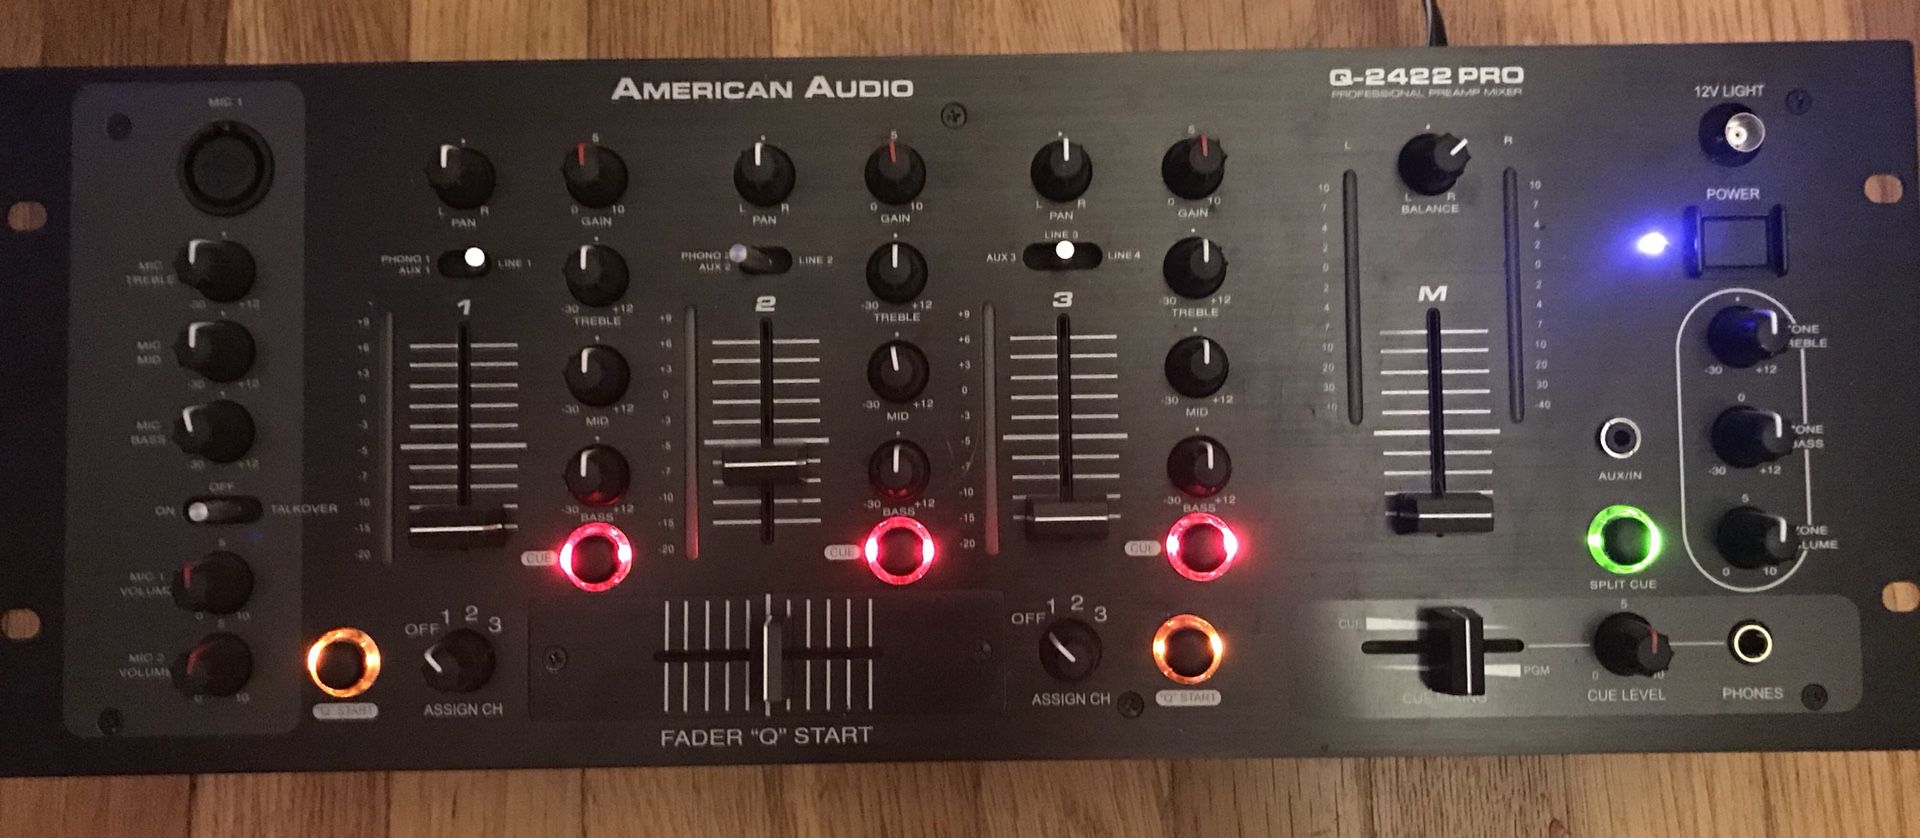 American audio G-2422 PRO mixer